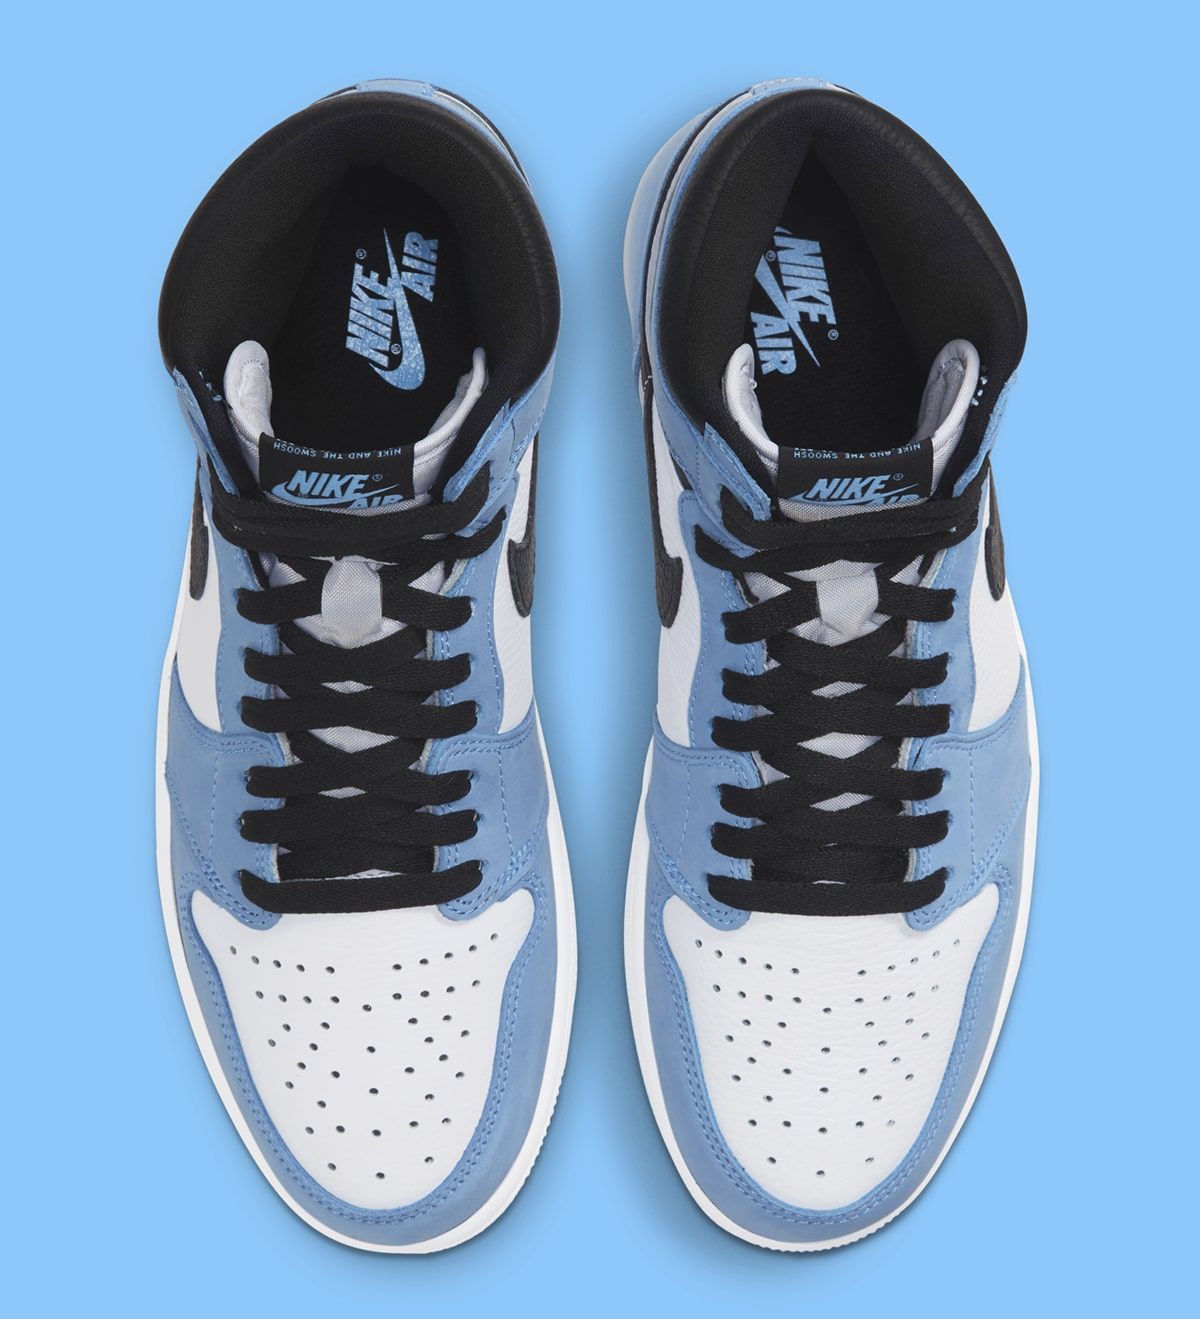 Where to Buy the Air Jordan 1 High “University Blue” | House of Heat°